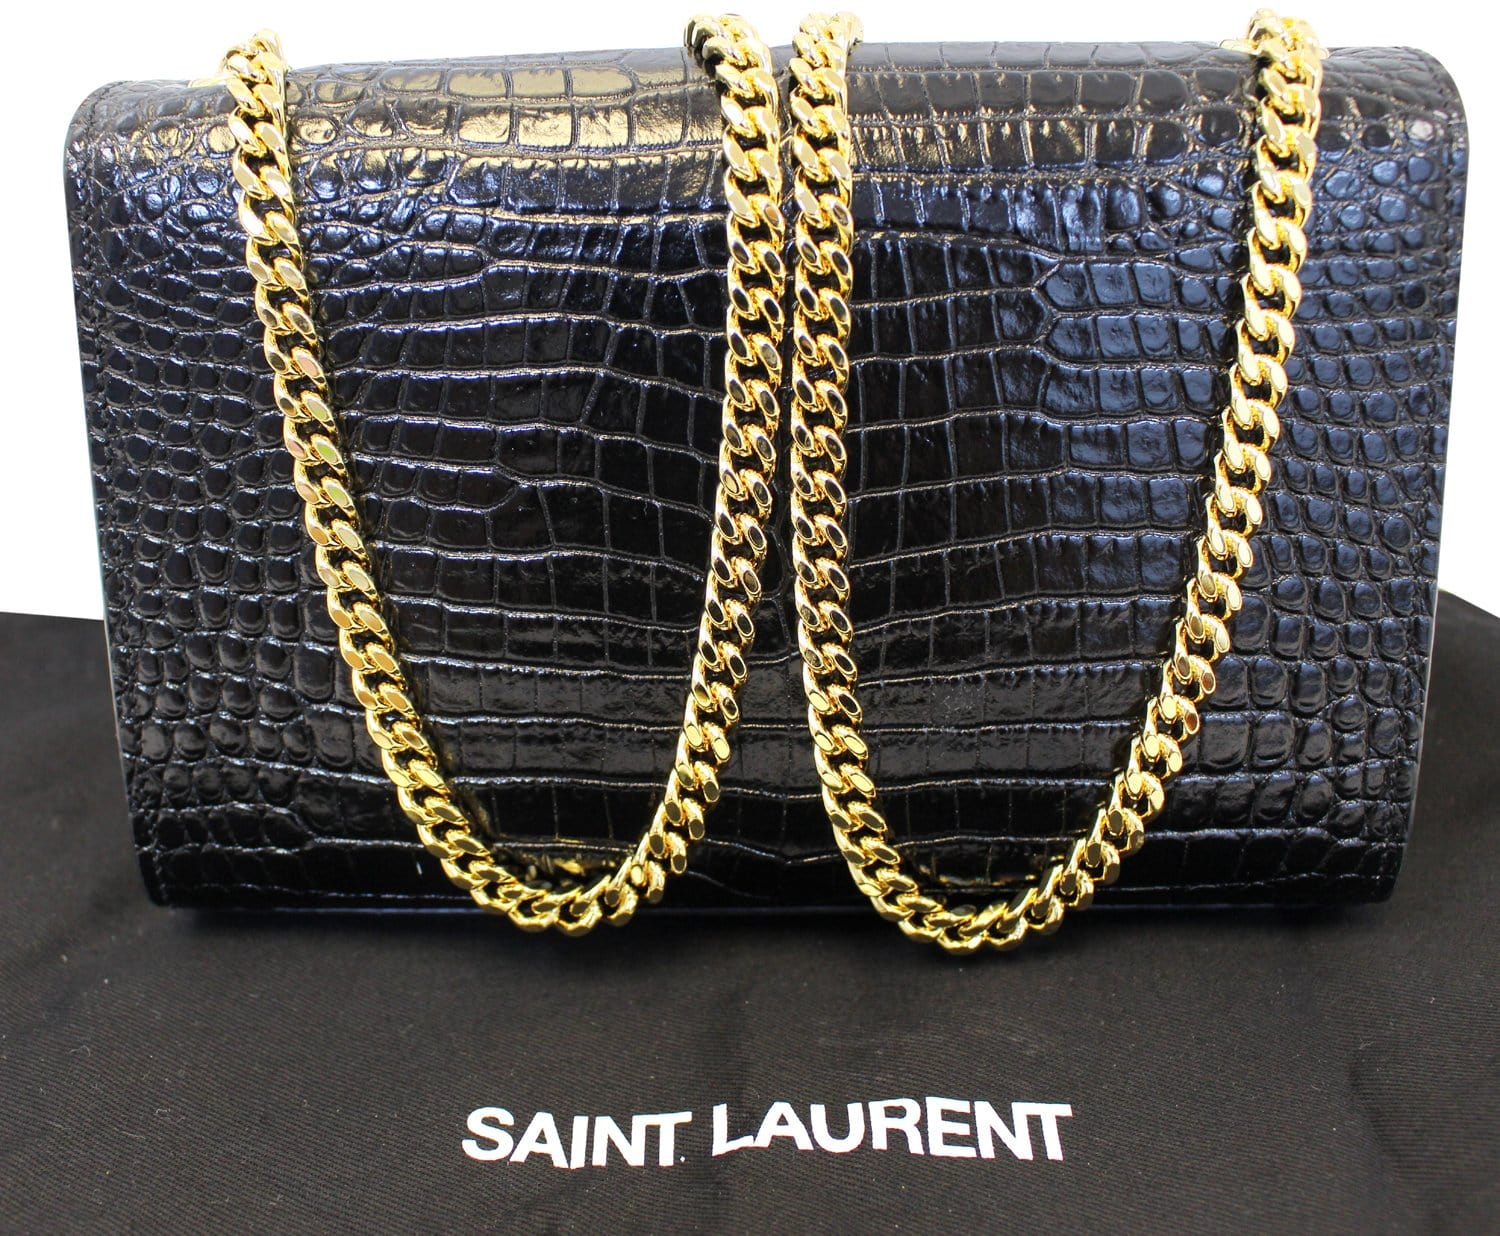 Yves Saint Laurent Golden Clutch with Tassels